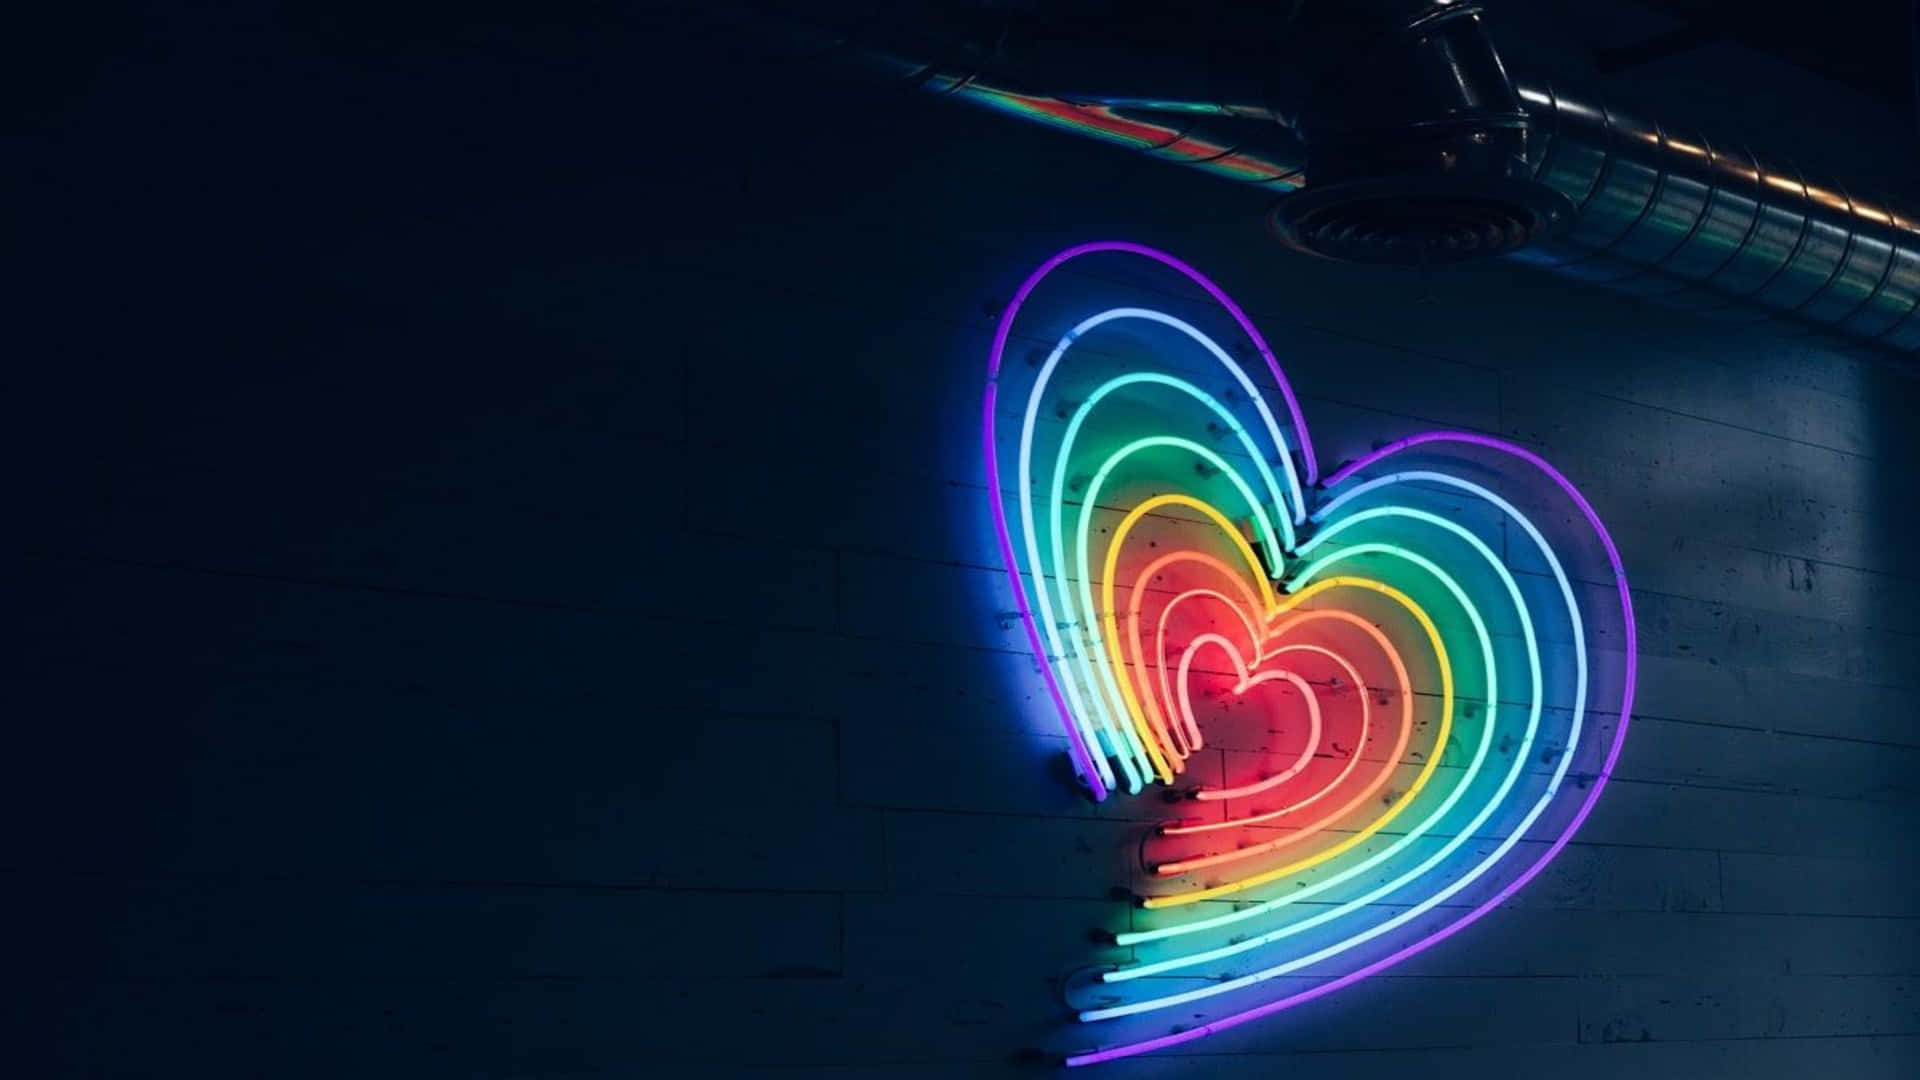 A Rainbow Heart Neon Sign In A Dark Room